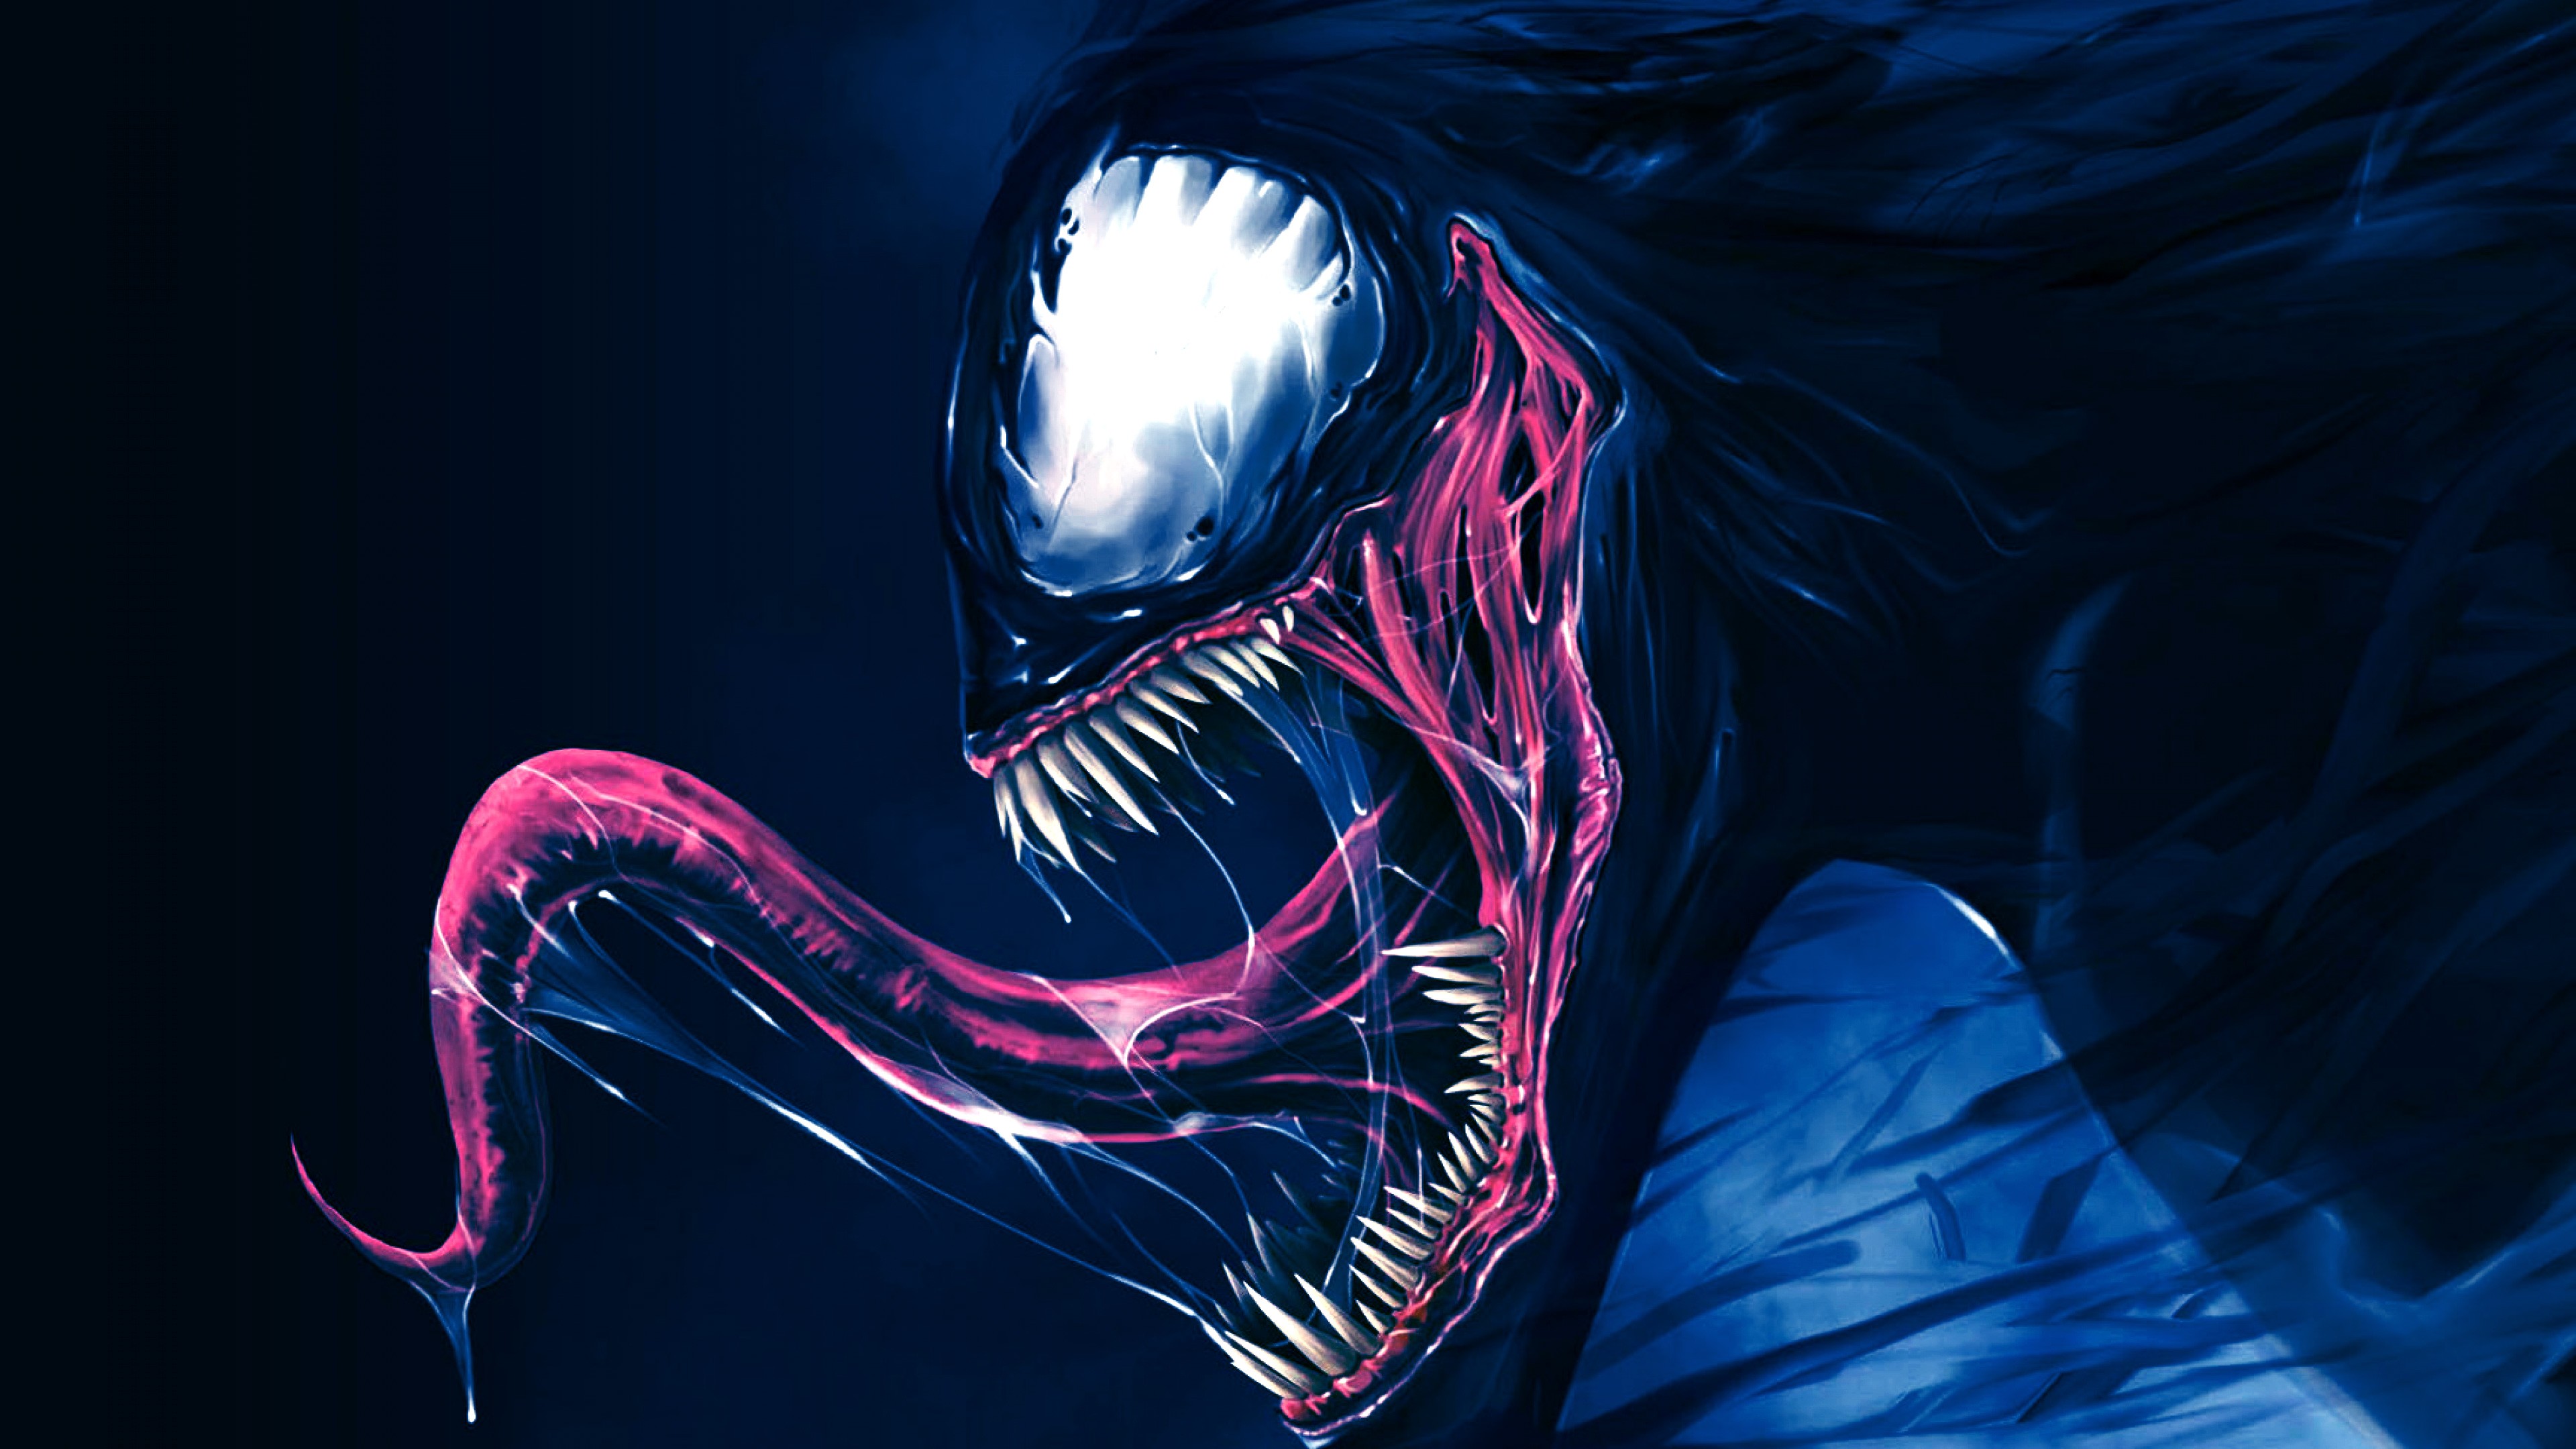 We Are Venom 4K Wallpapers